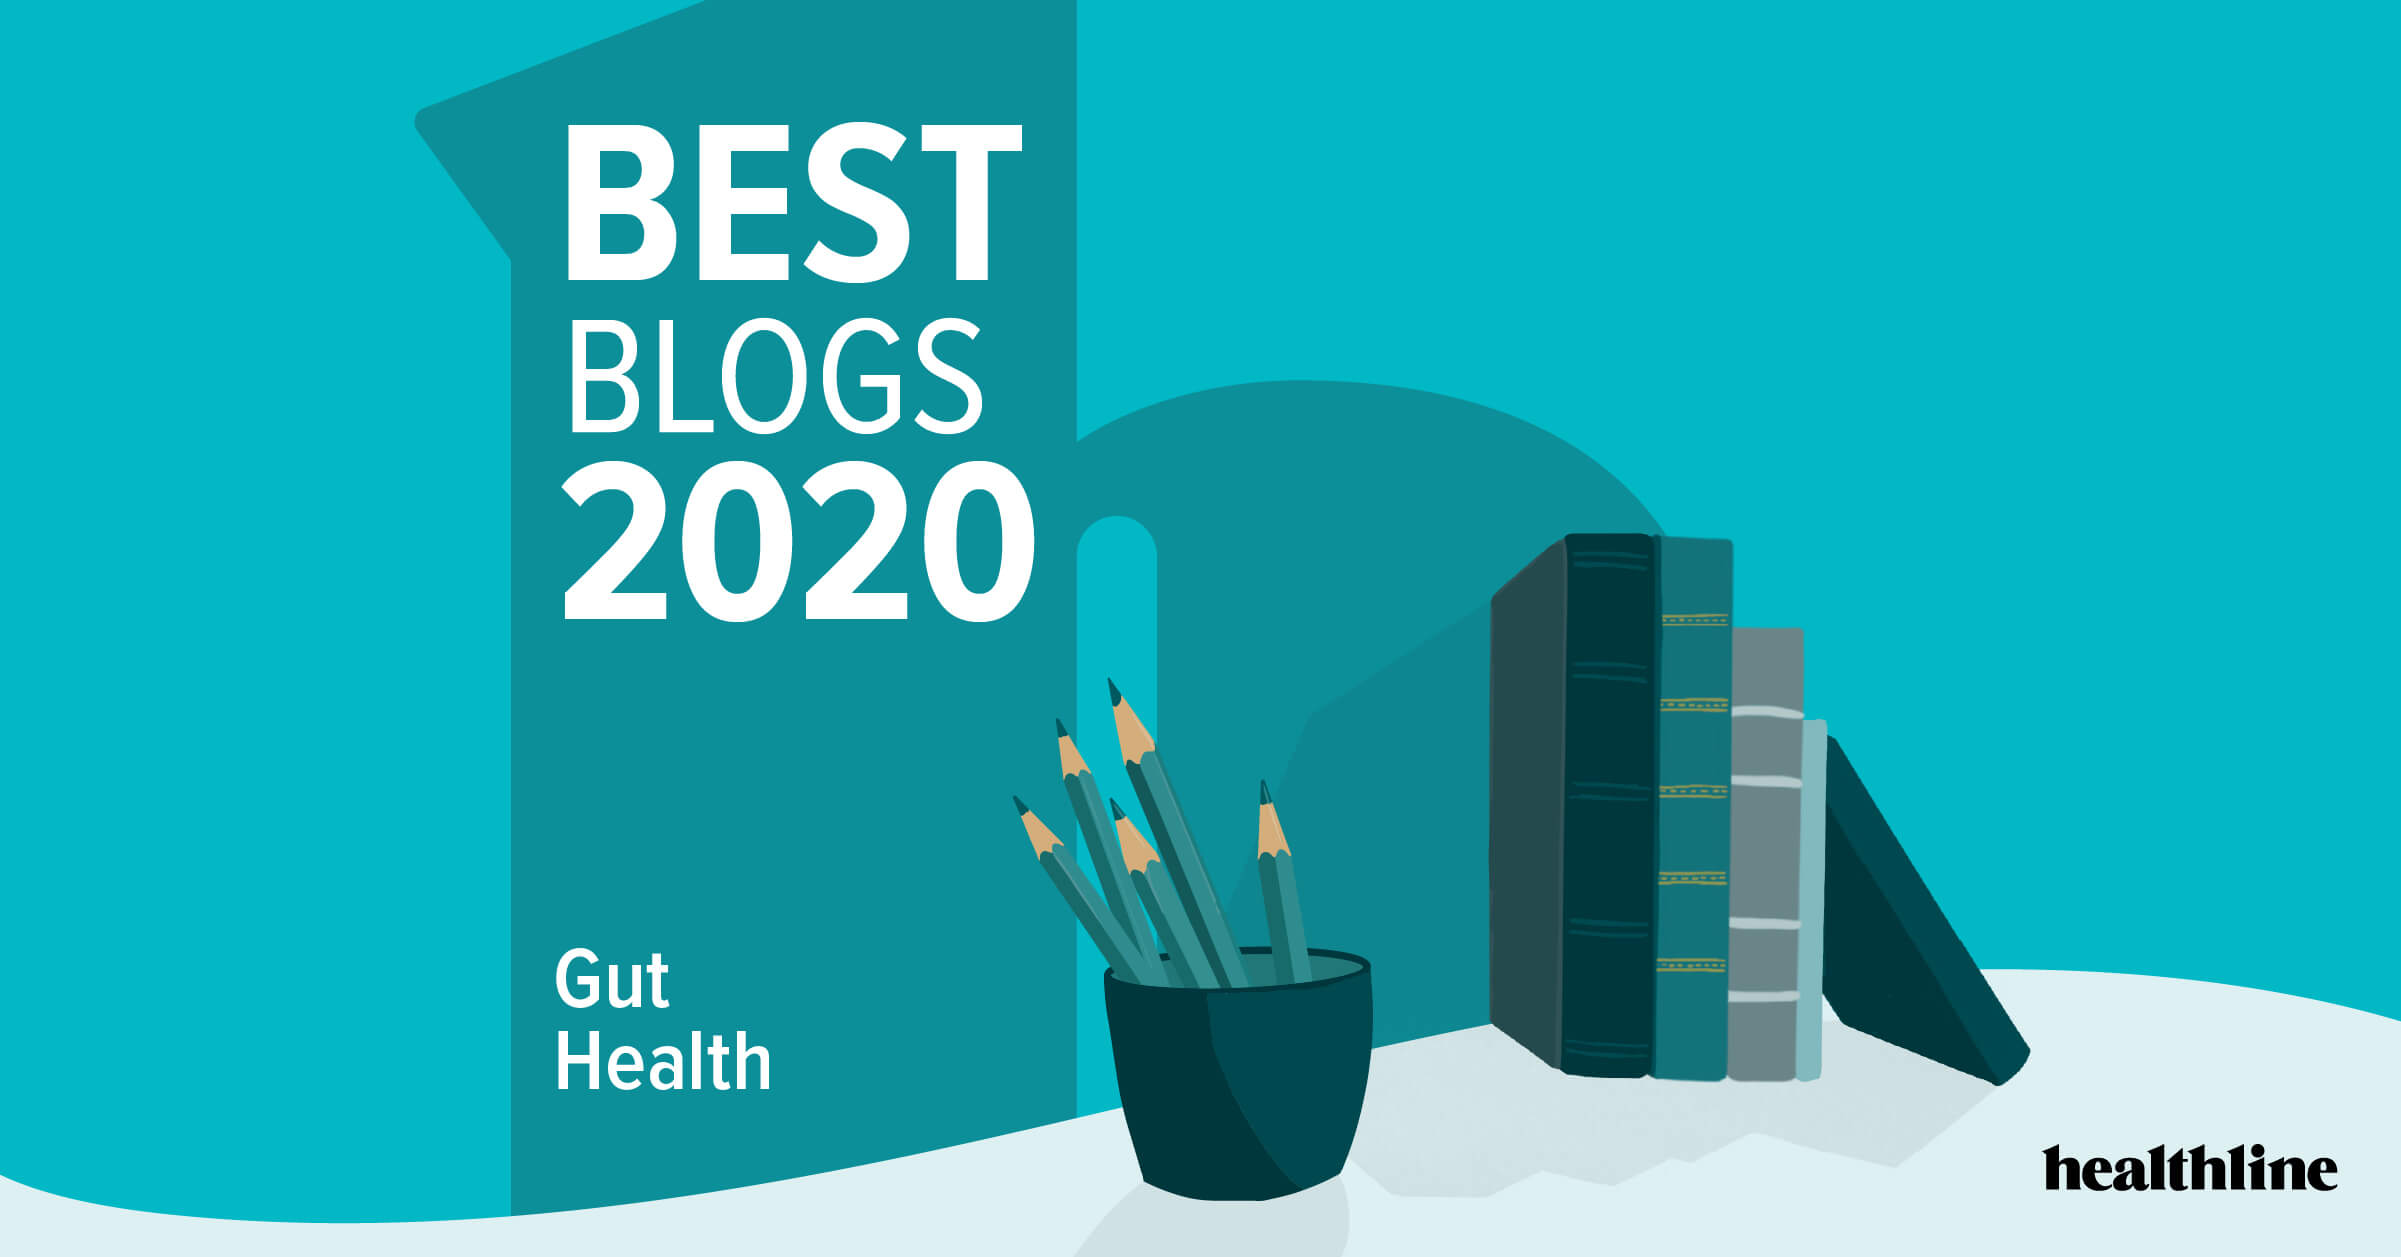 A Gutsy Girl’s Favorites Issue 17 agutsygirl.com #healthyliving Gut Health Best Blogs of 2020 Healthline #guthealth